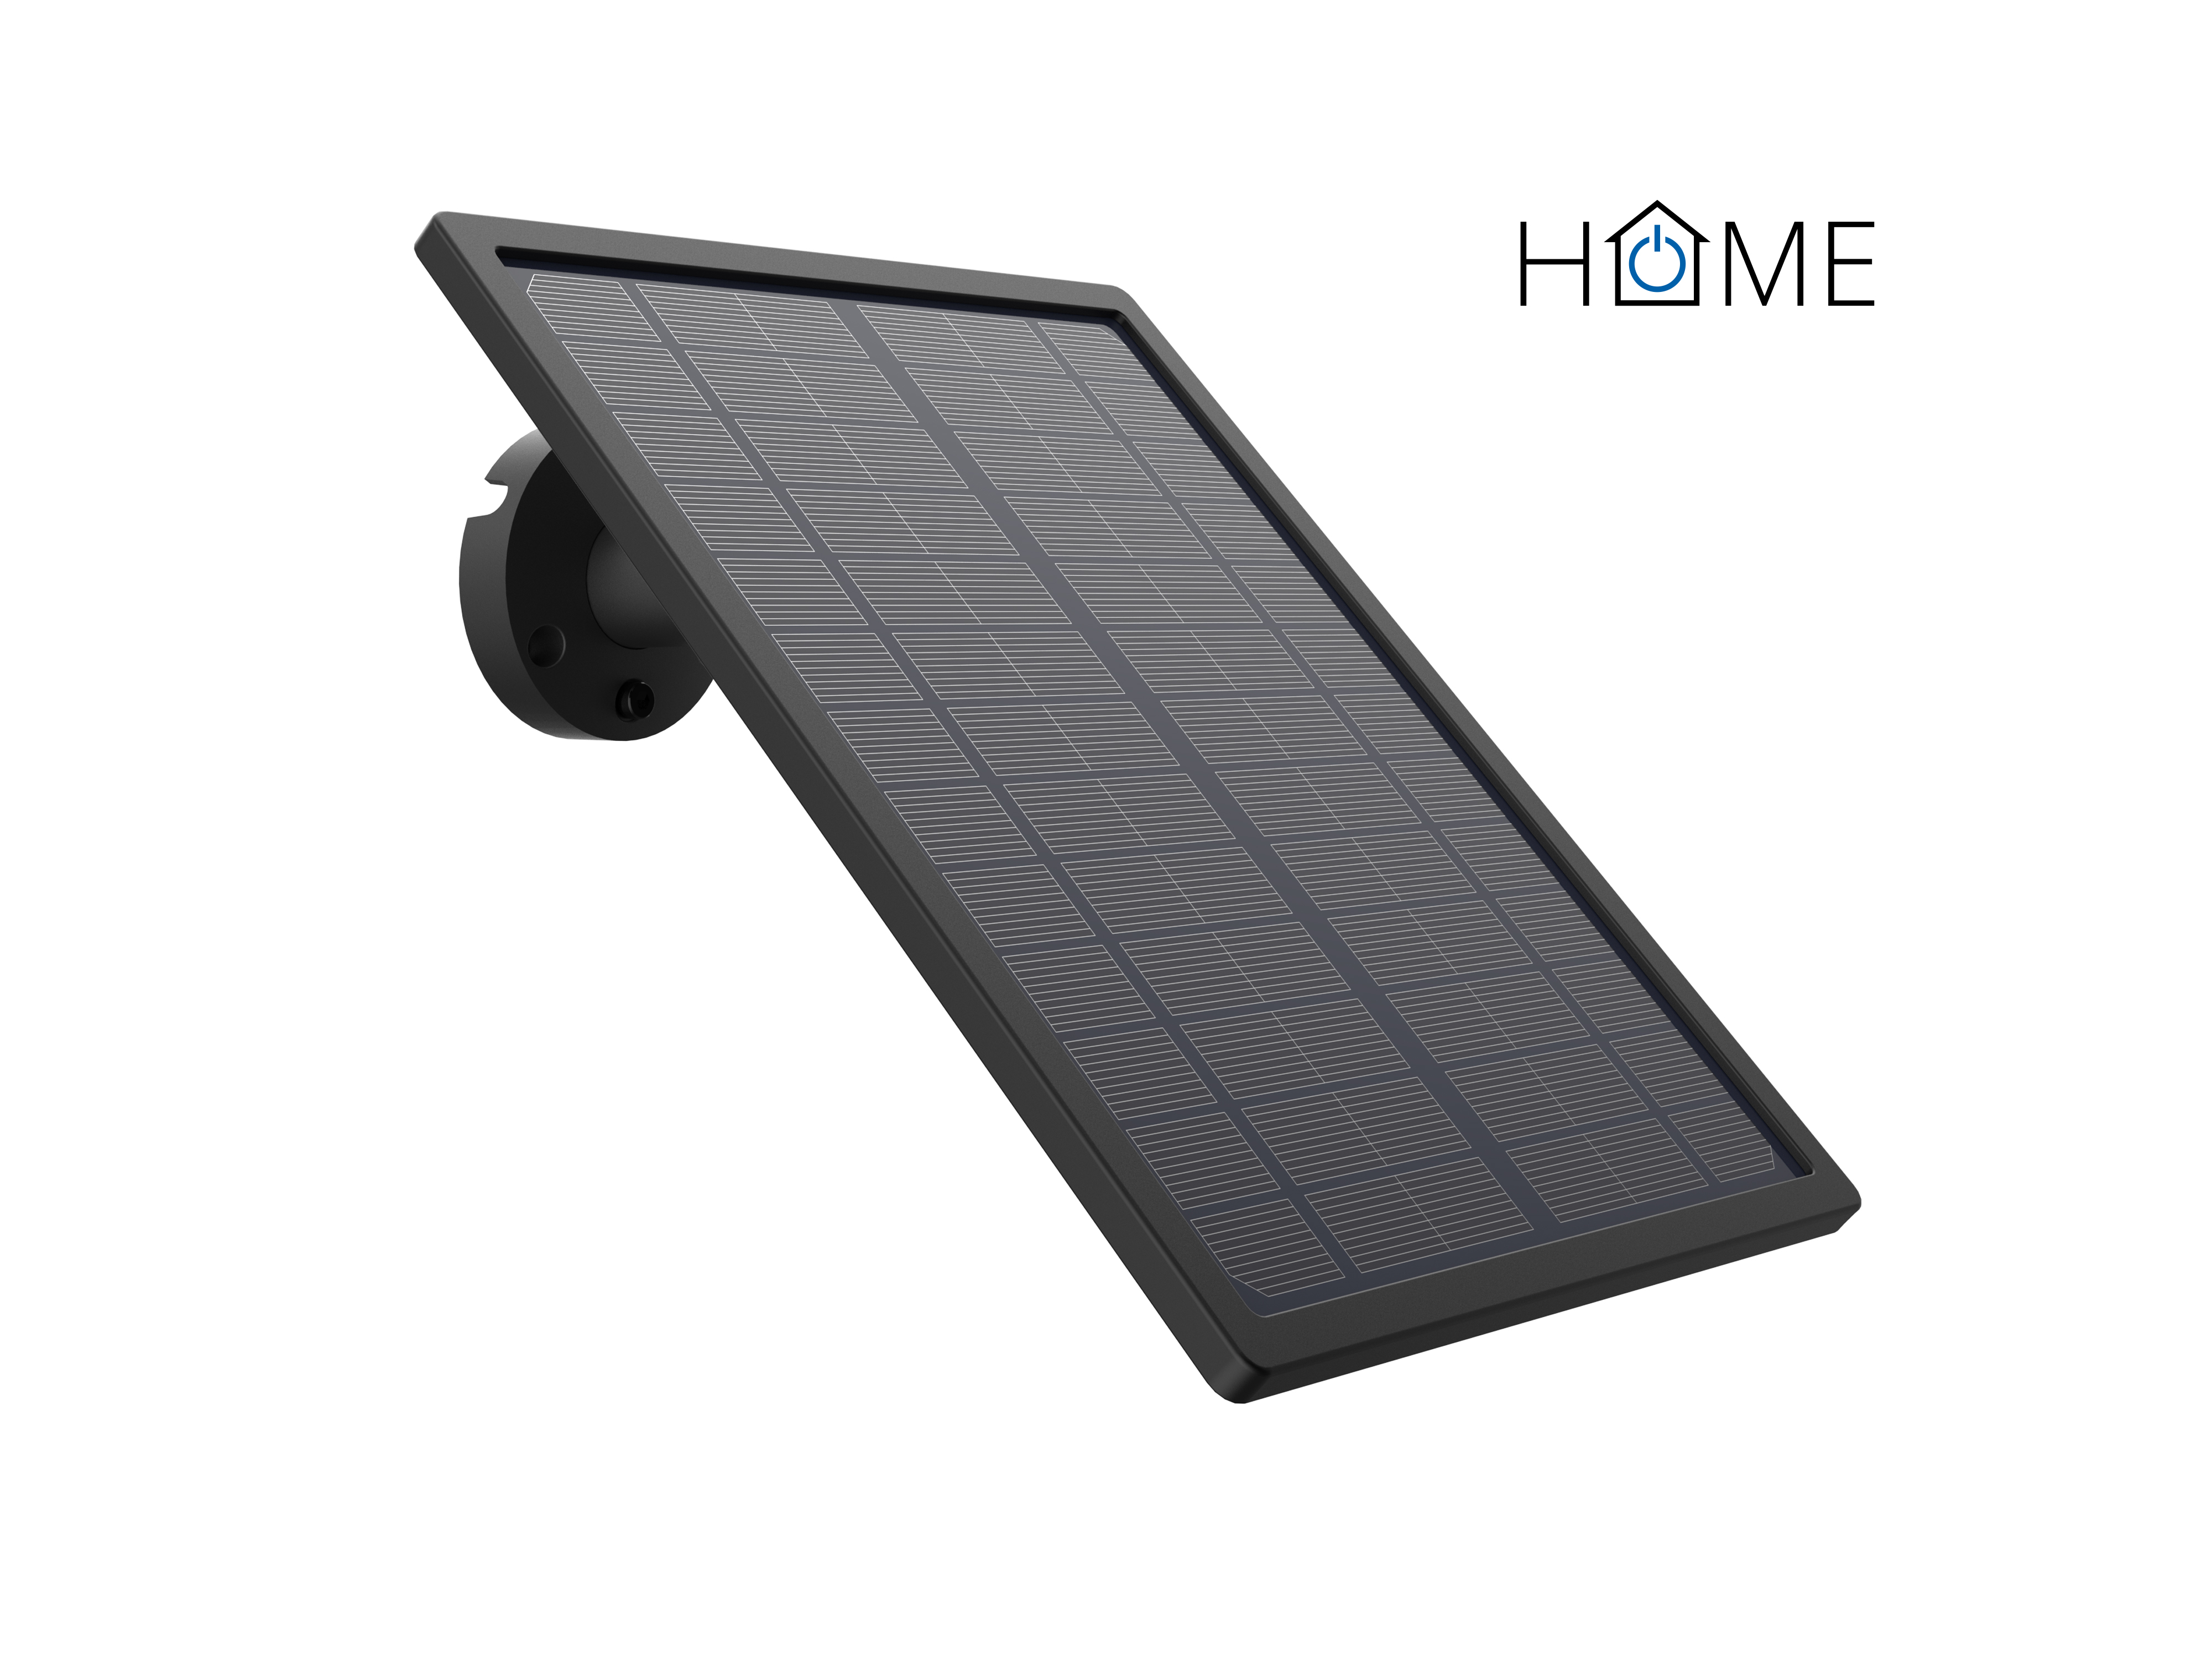 Obrázek iGET HOME Solar SP2 - fotovoltaický panel 5 Watt, microUSB, kabel 3 m, univerzální